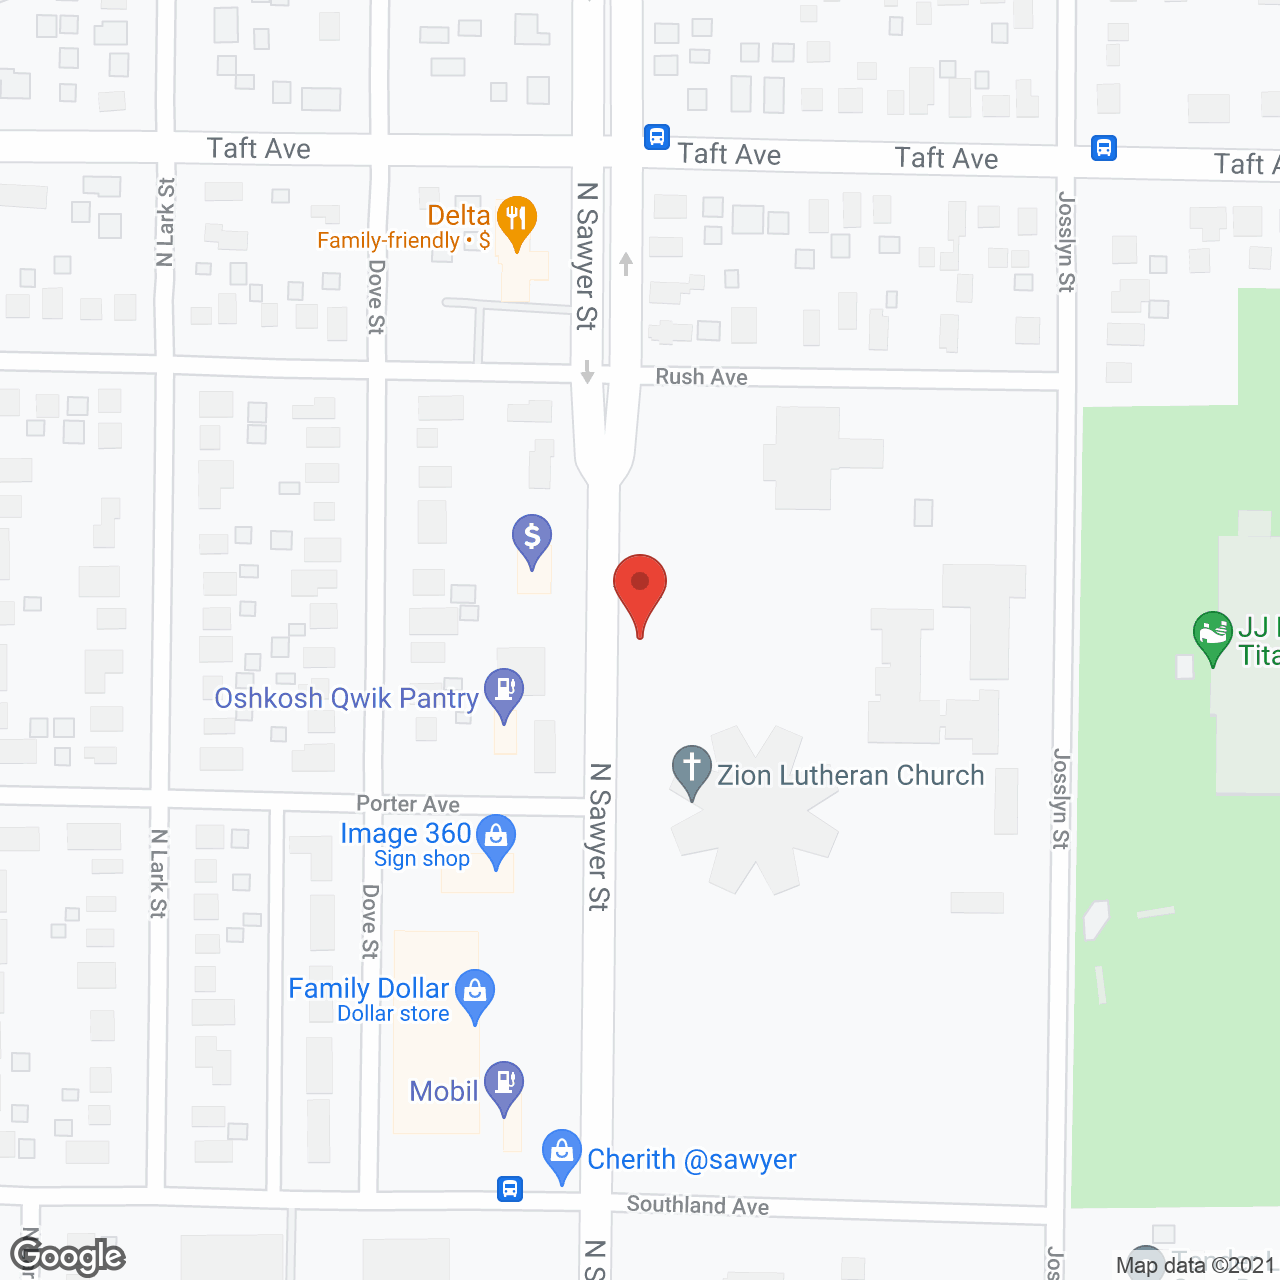 Zion Lutheran Church in google map